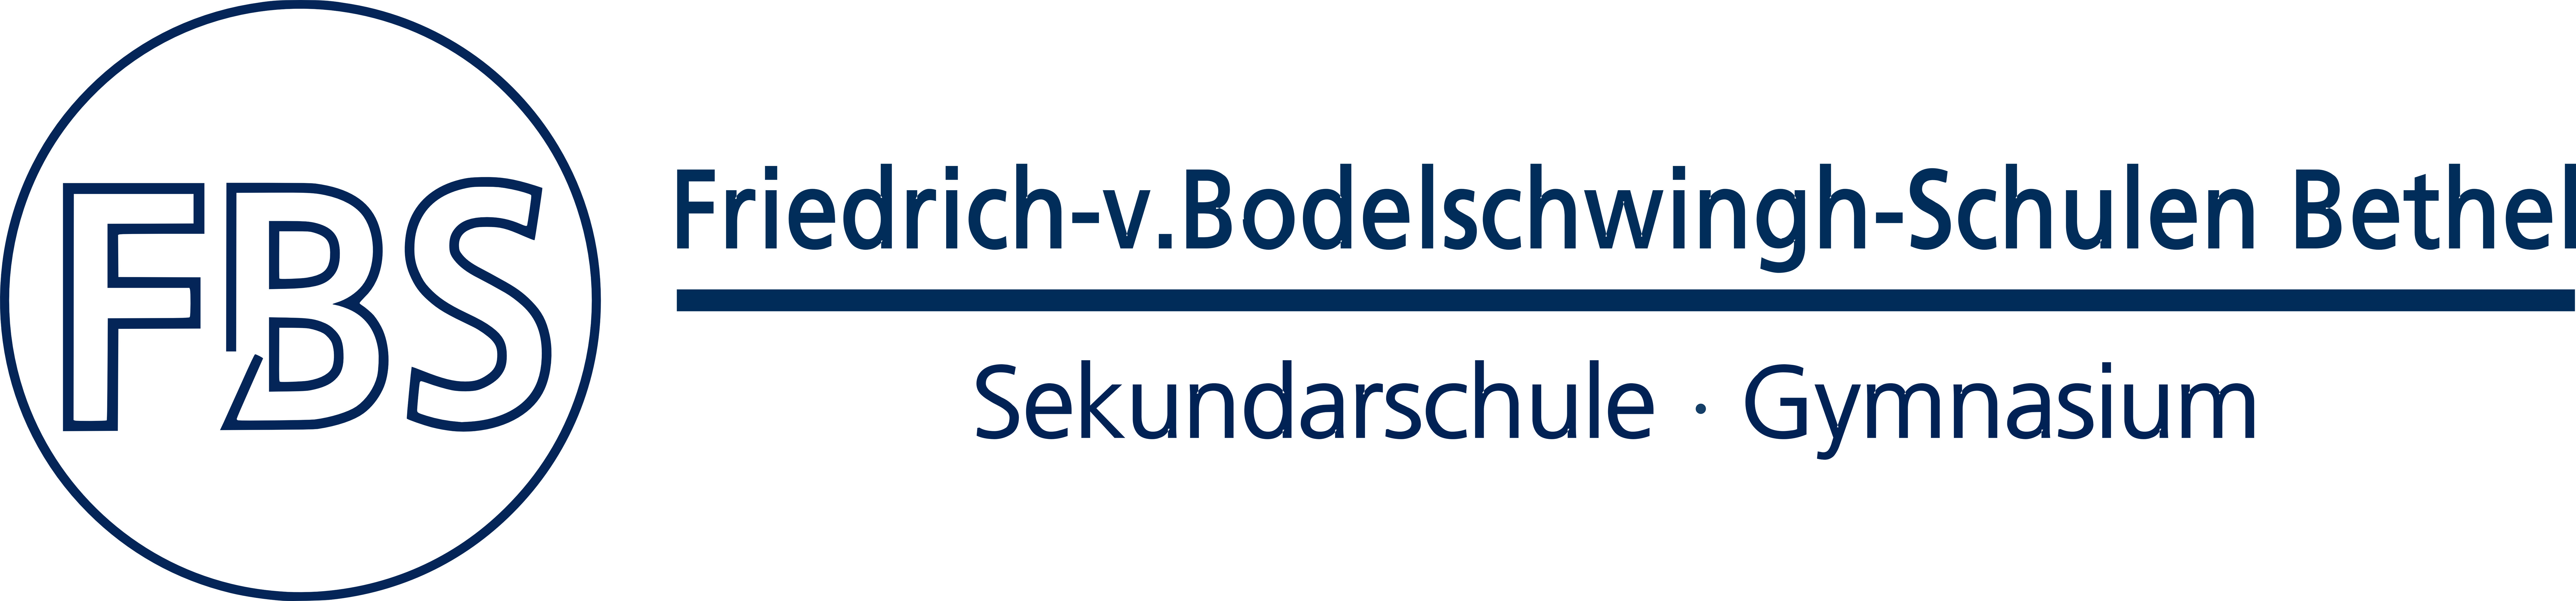 Friedrich-v.Bodelschwingh-Schulen